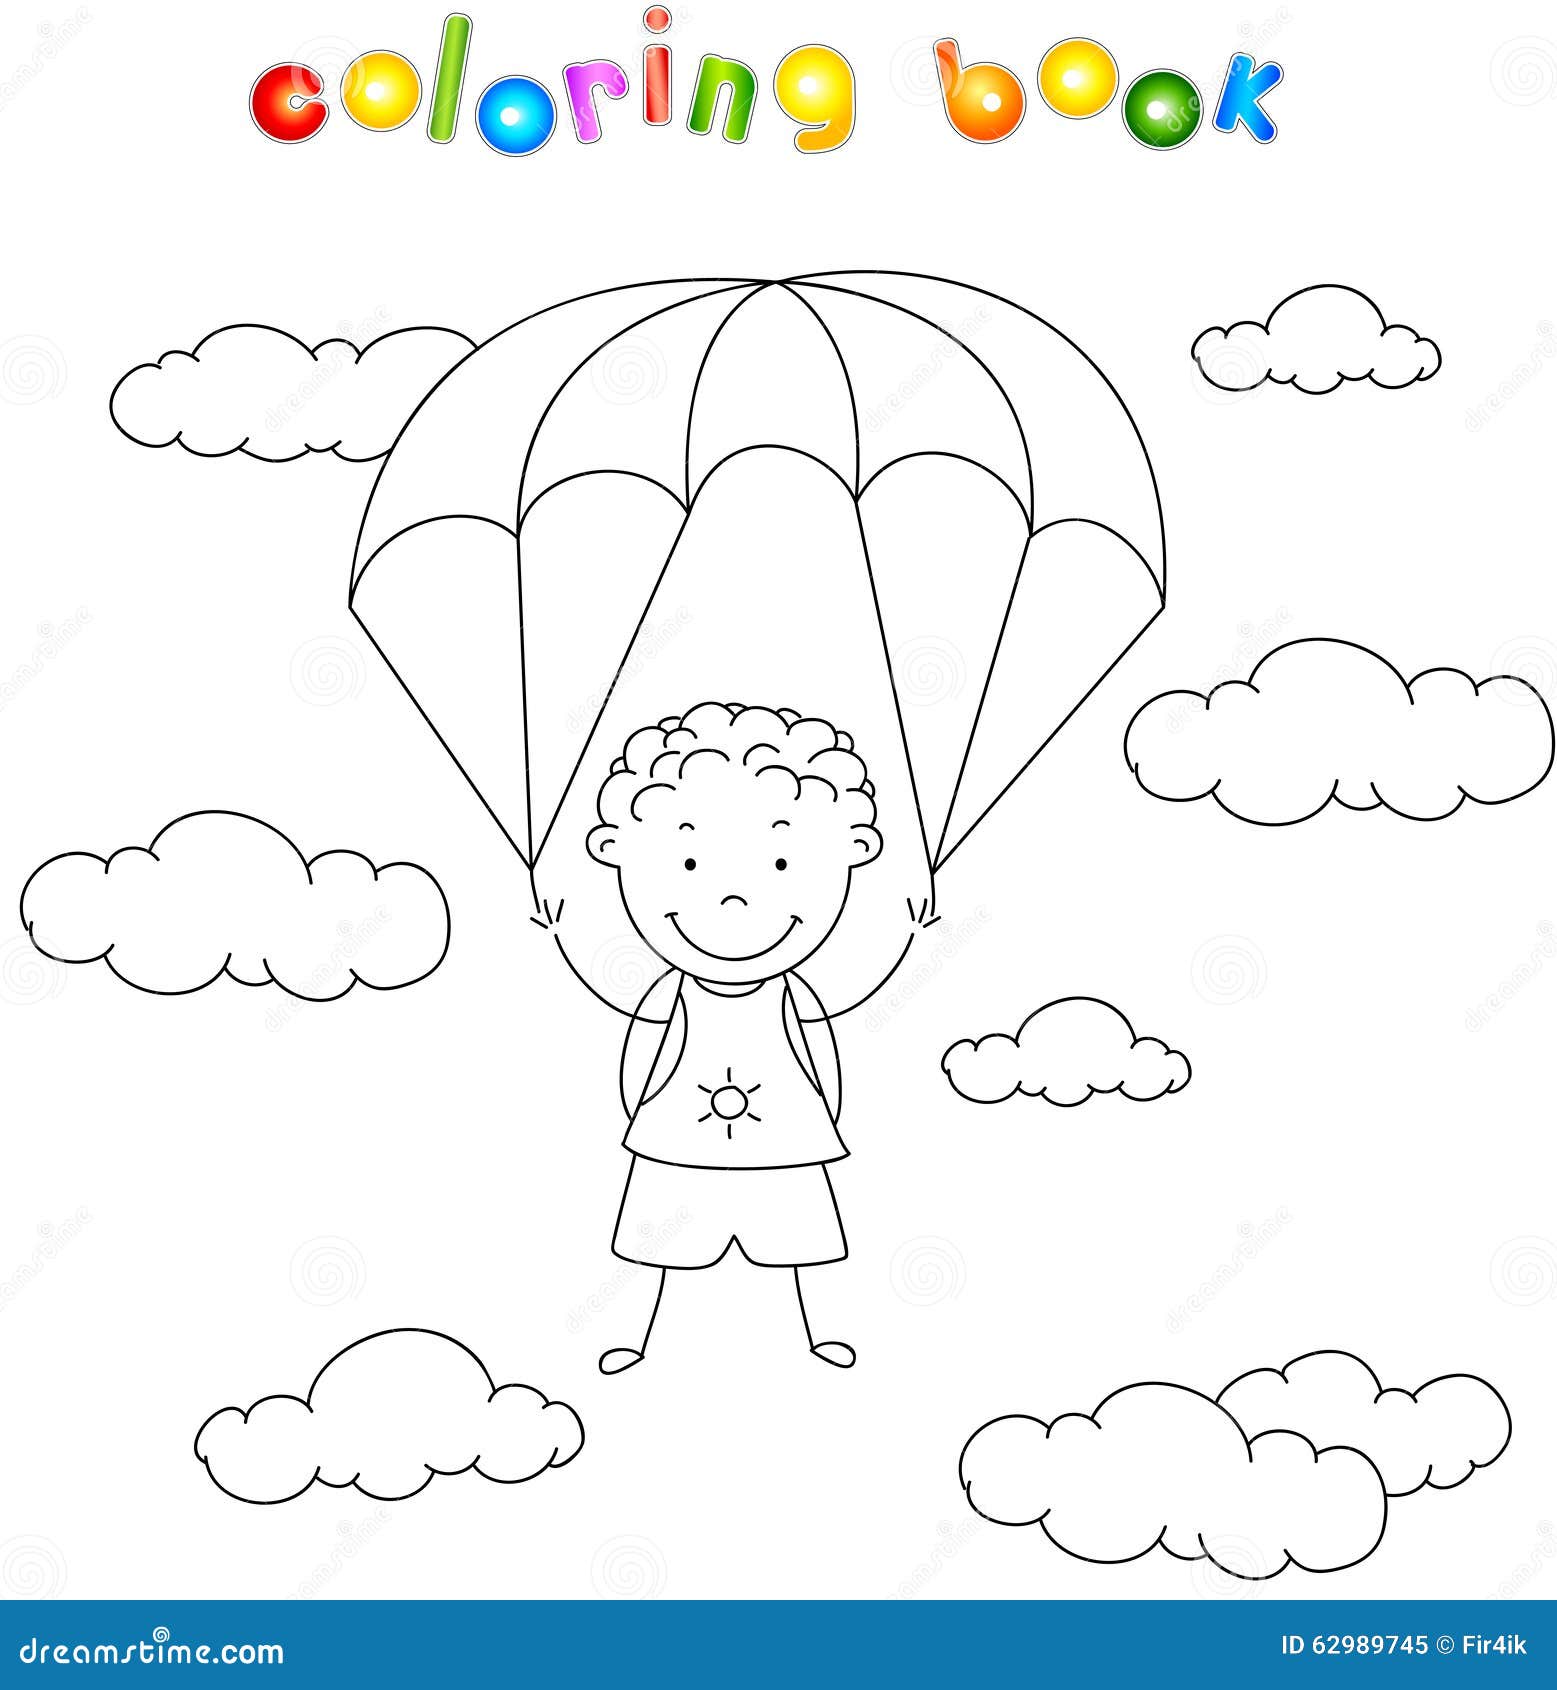 Il paracadutista del ragazzo discende dal cielo su un paracadute con